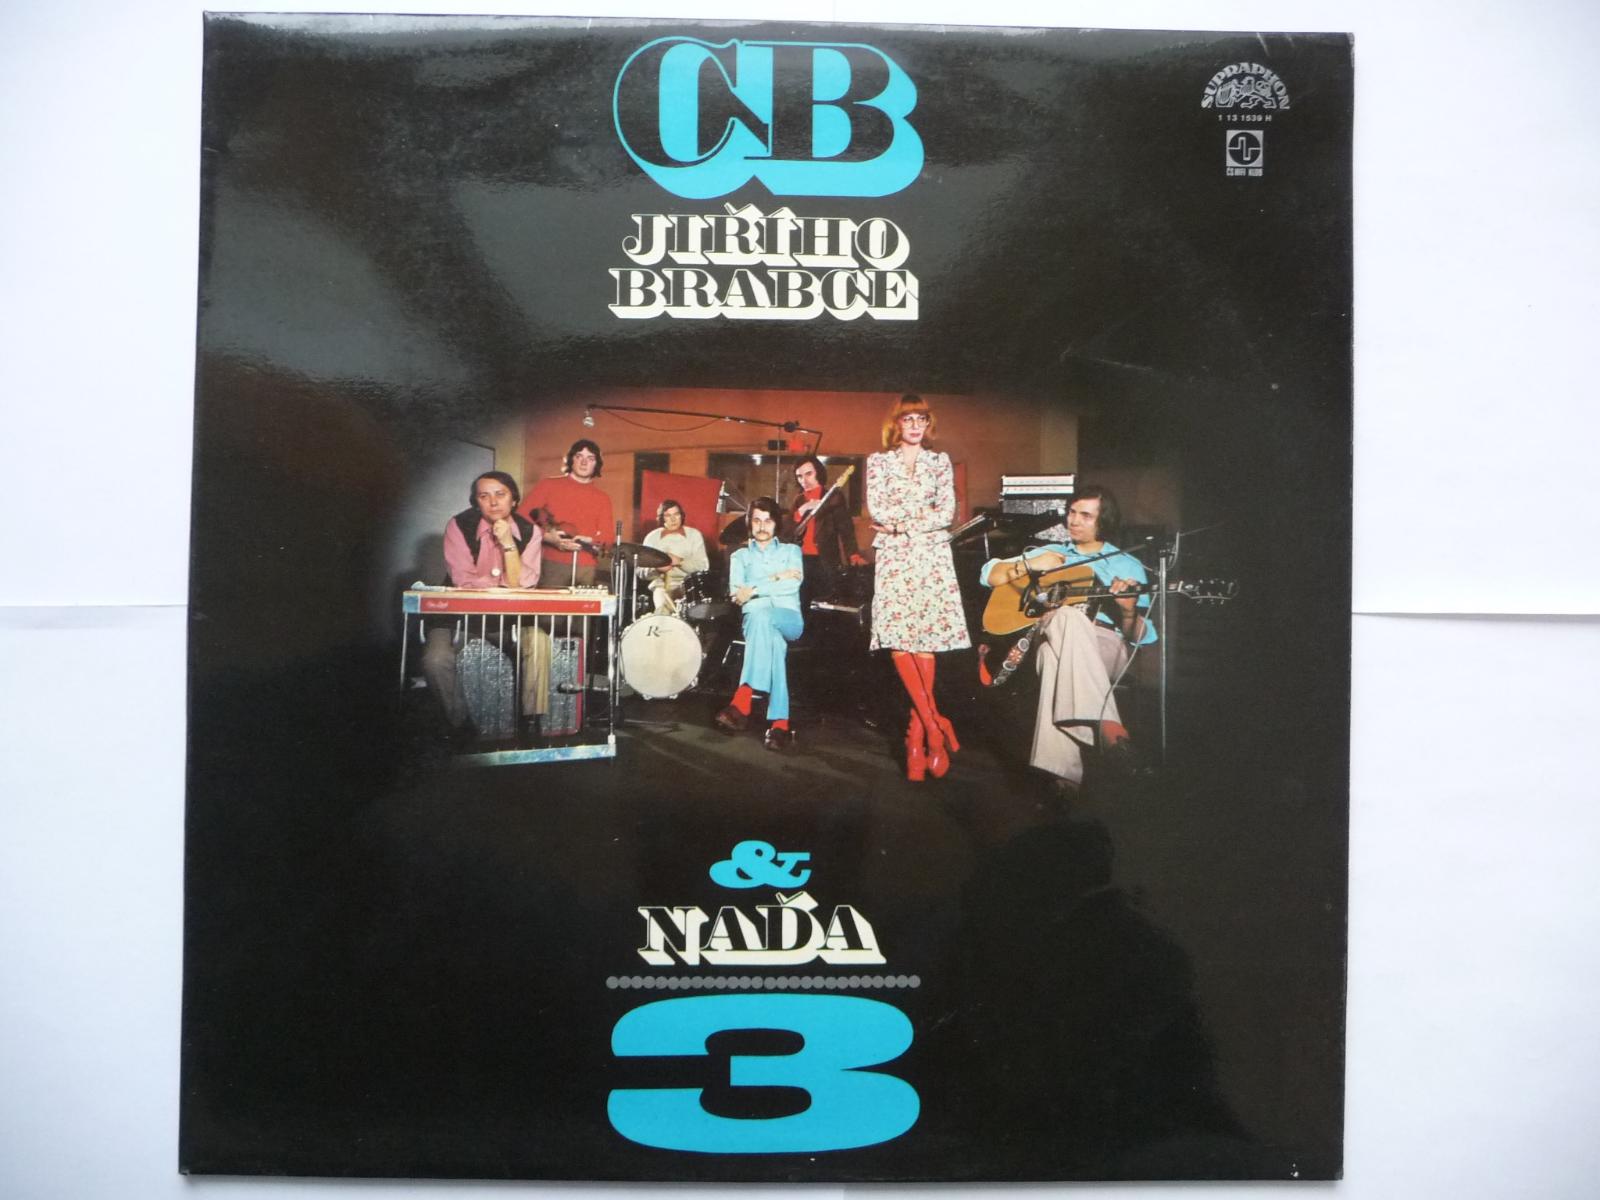 CB Jiřího Brabca & Naďa Urbánková 3 - SUPRAPHON 1975 - Hudba